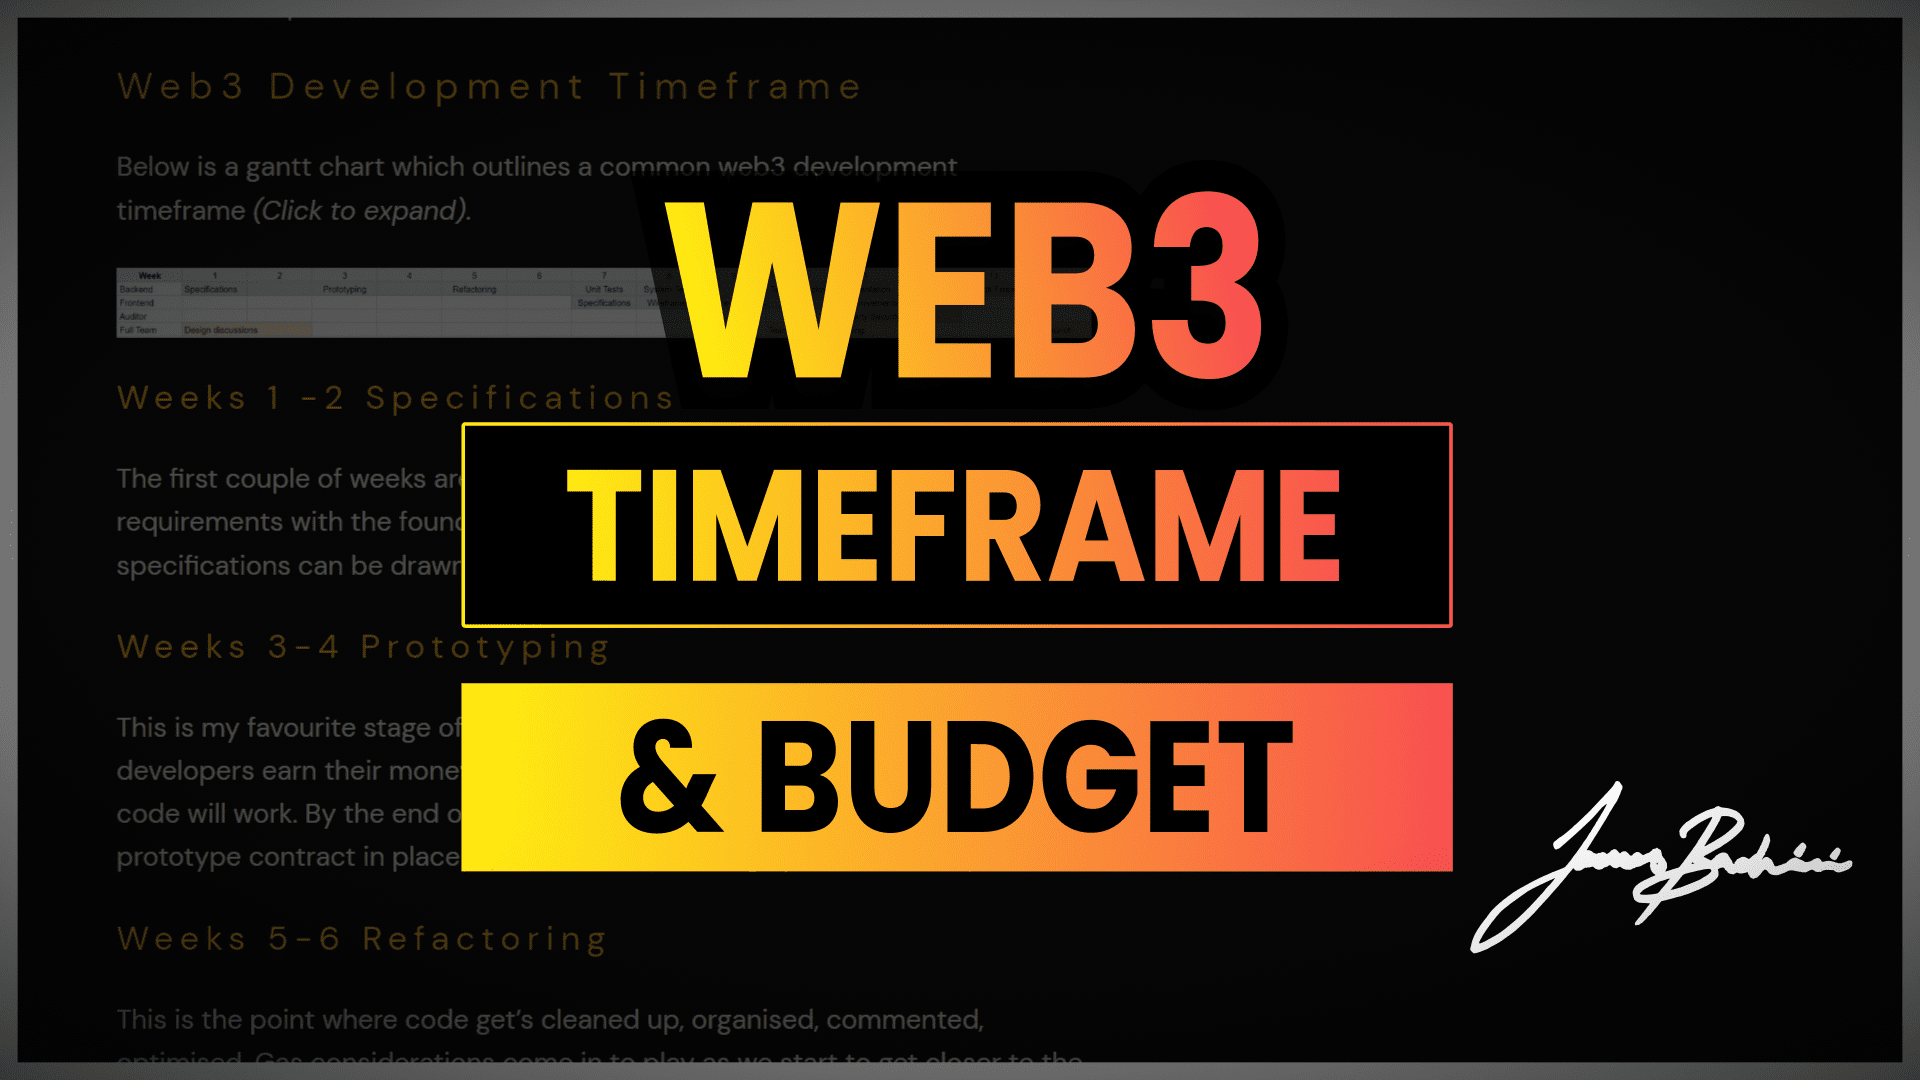 Web3 Timeframe and Budget